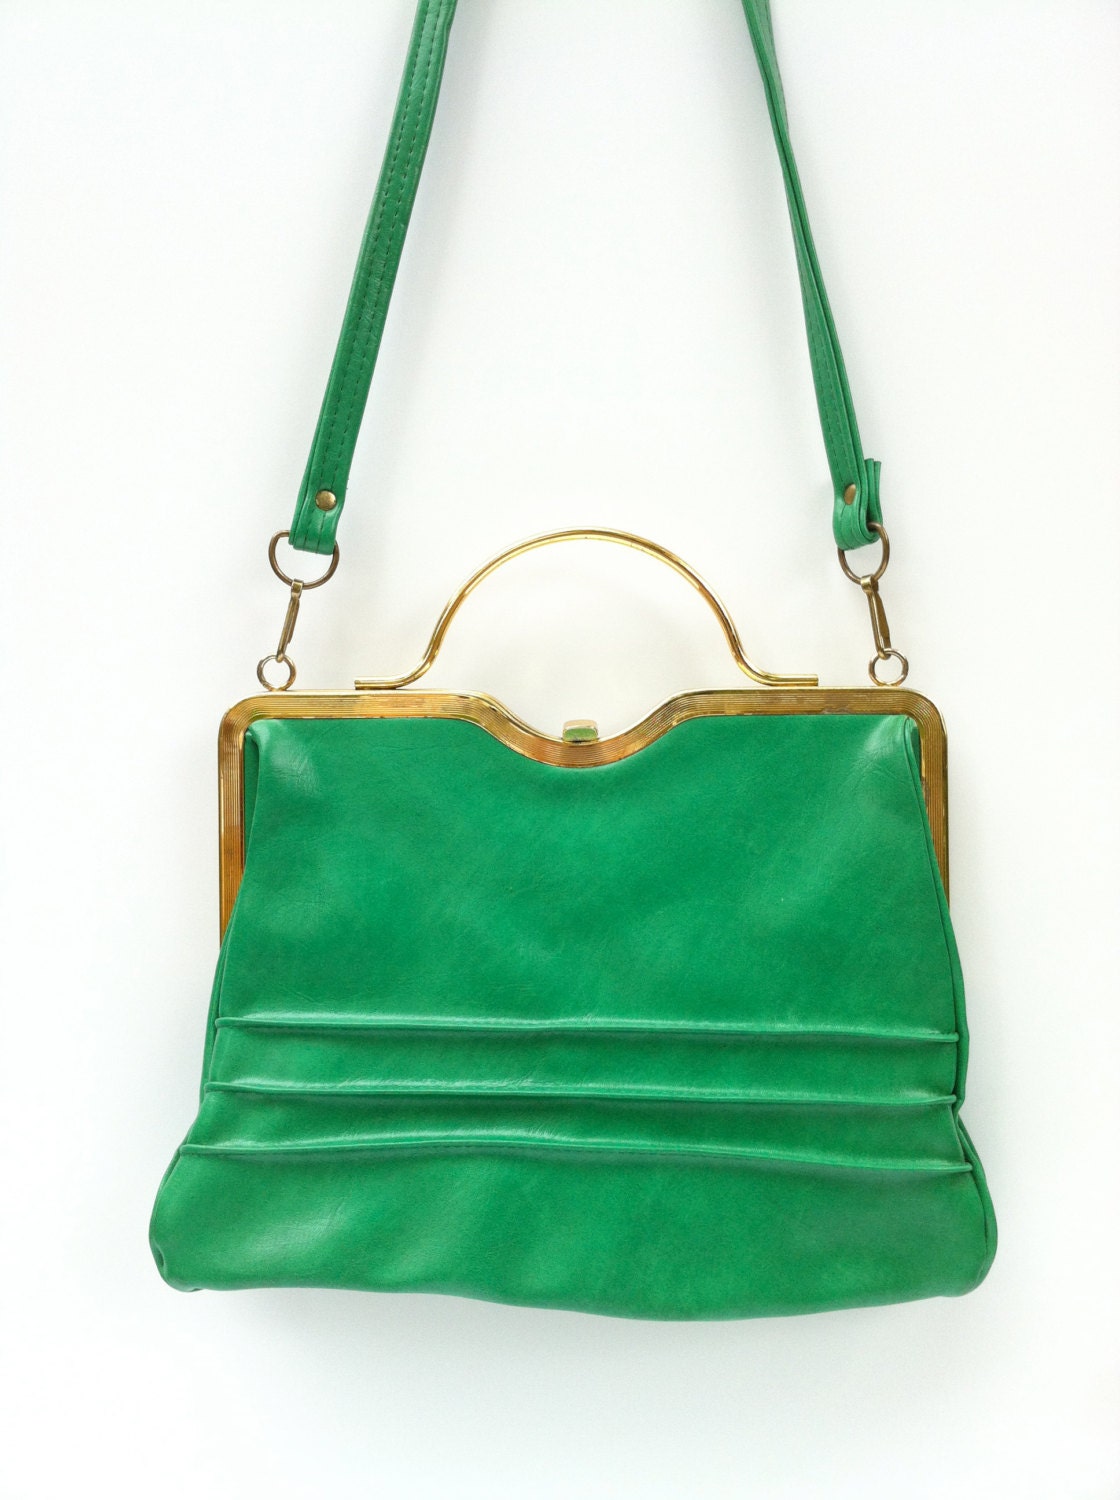 Fantastic kelly green Clarks Handbag - Made in England - FolkandHome